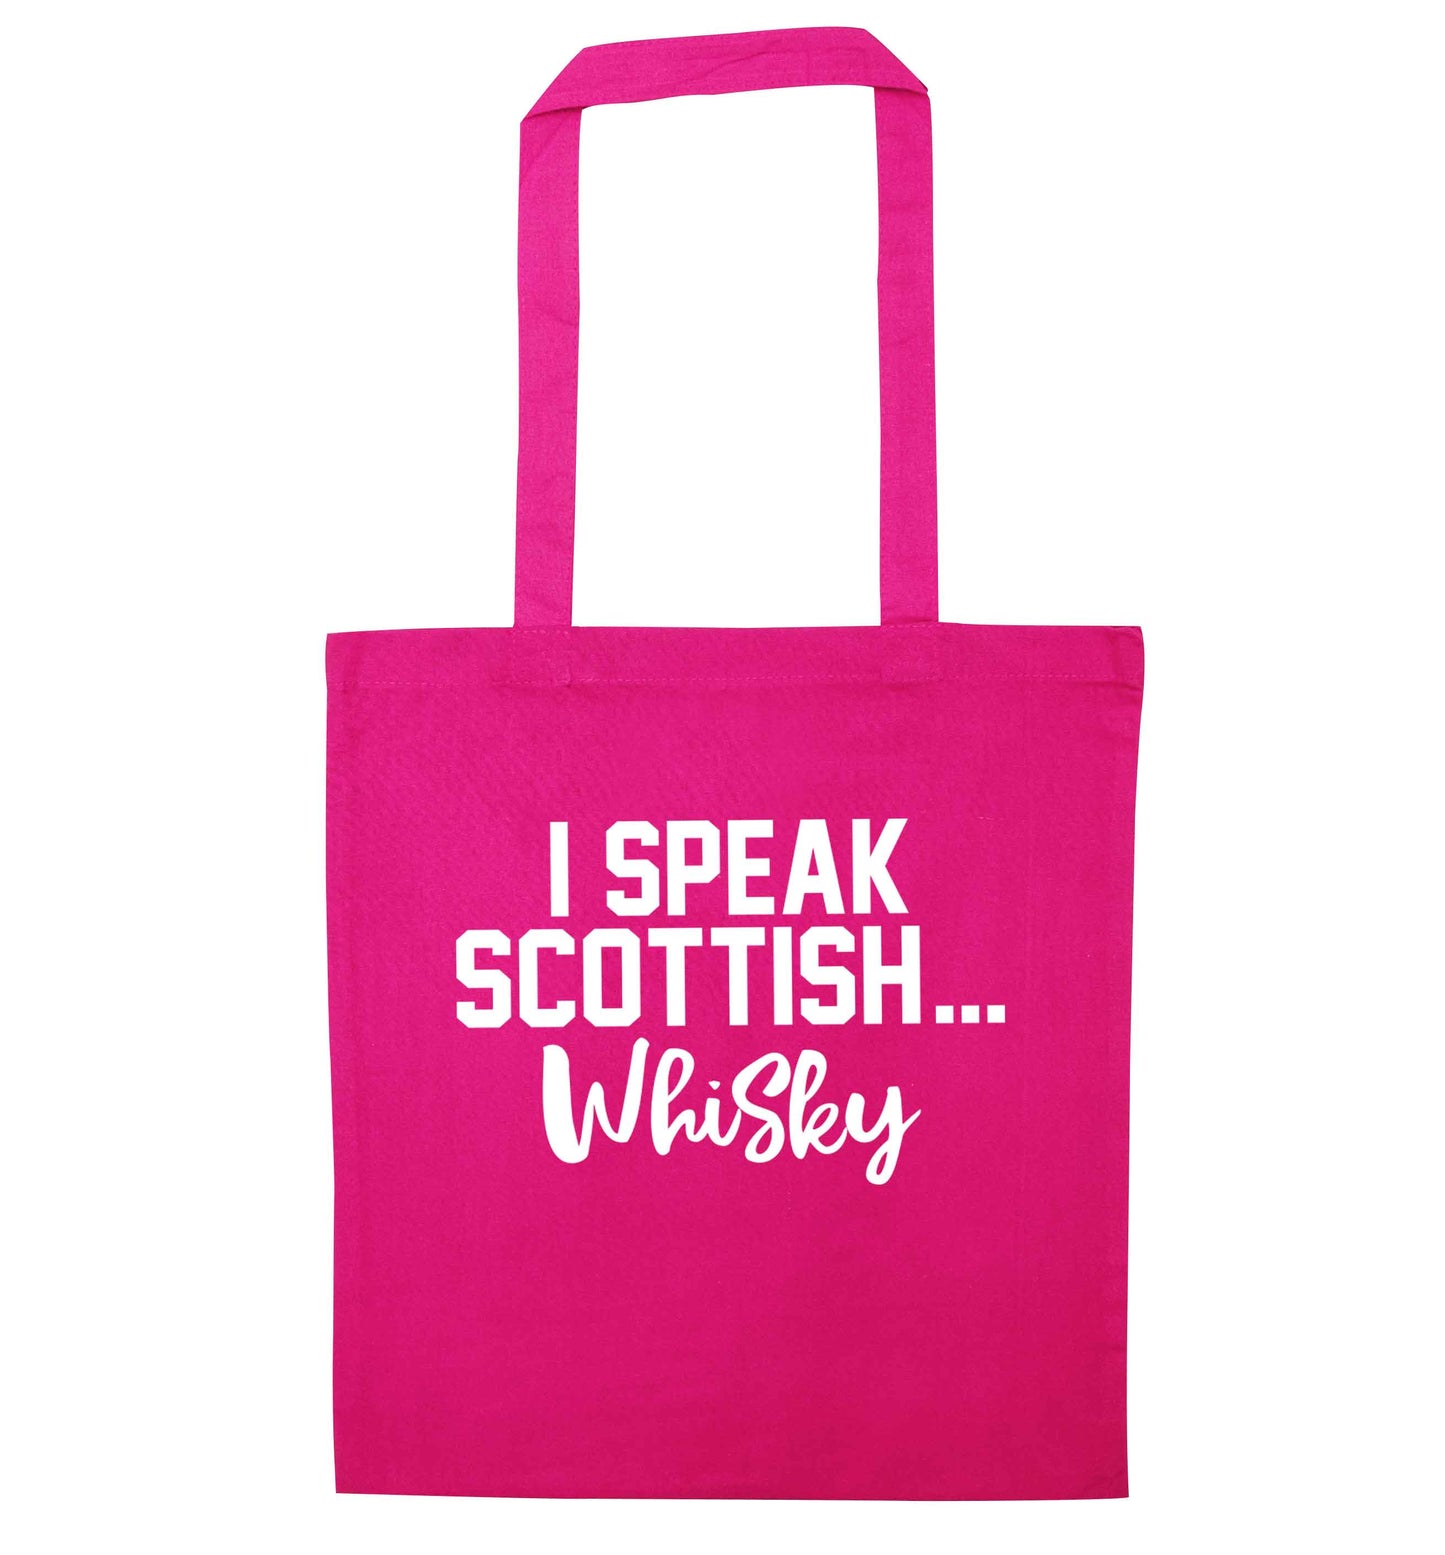 I speak scottish...whisky pink tote bag